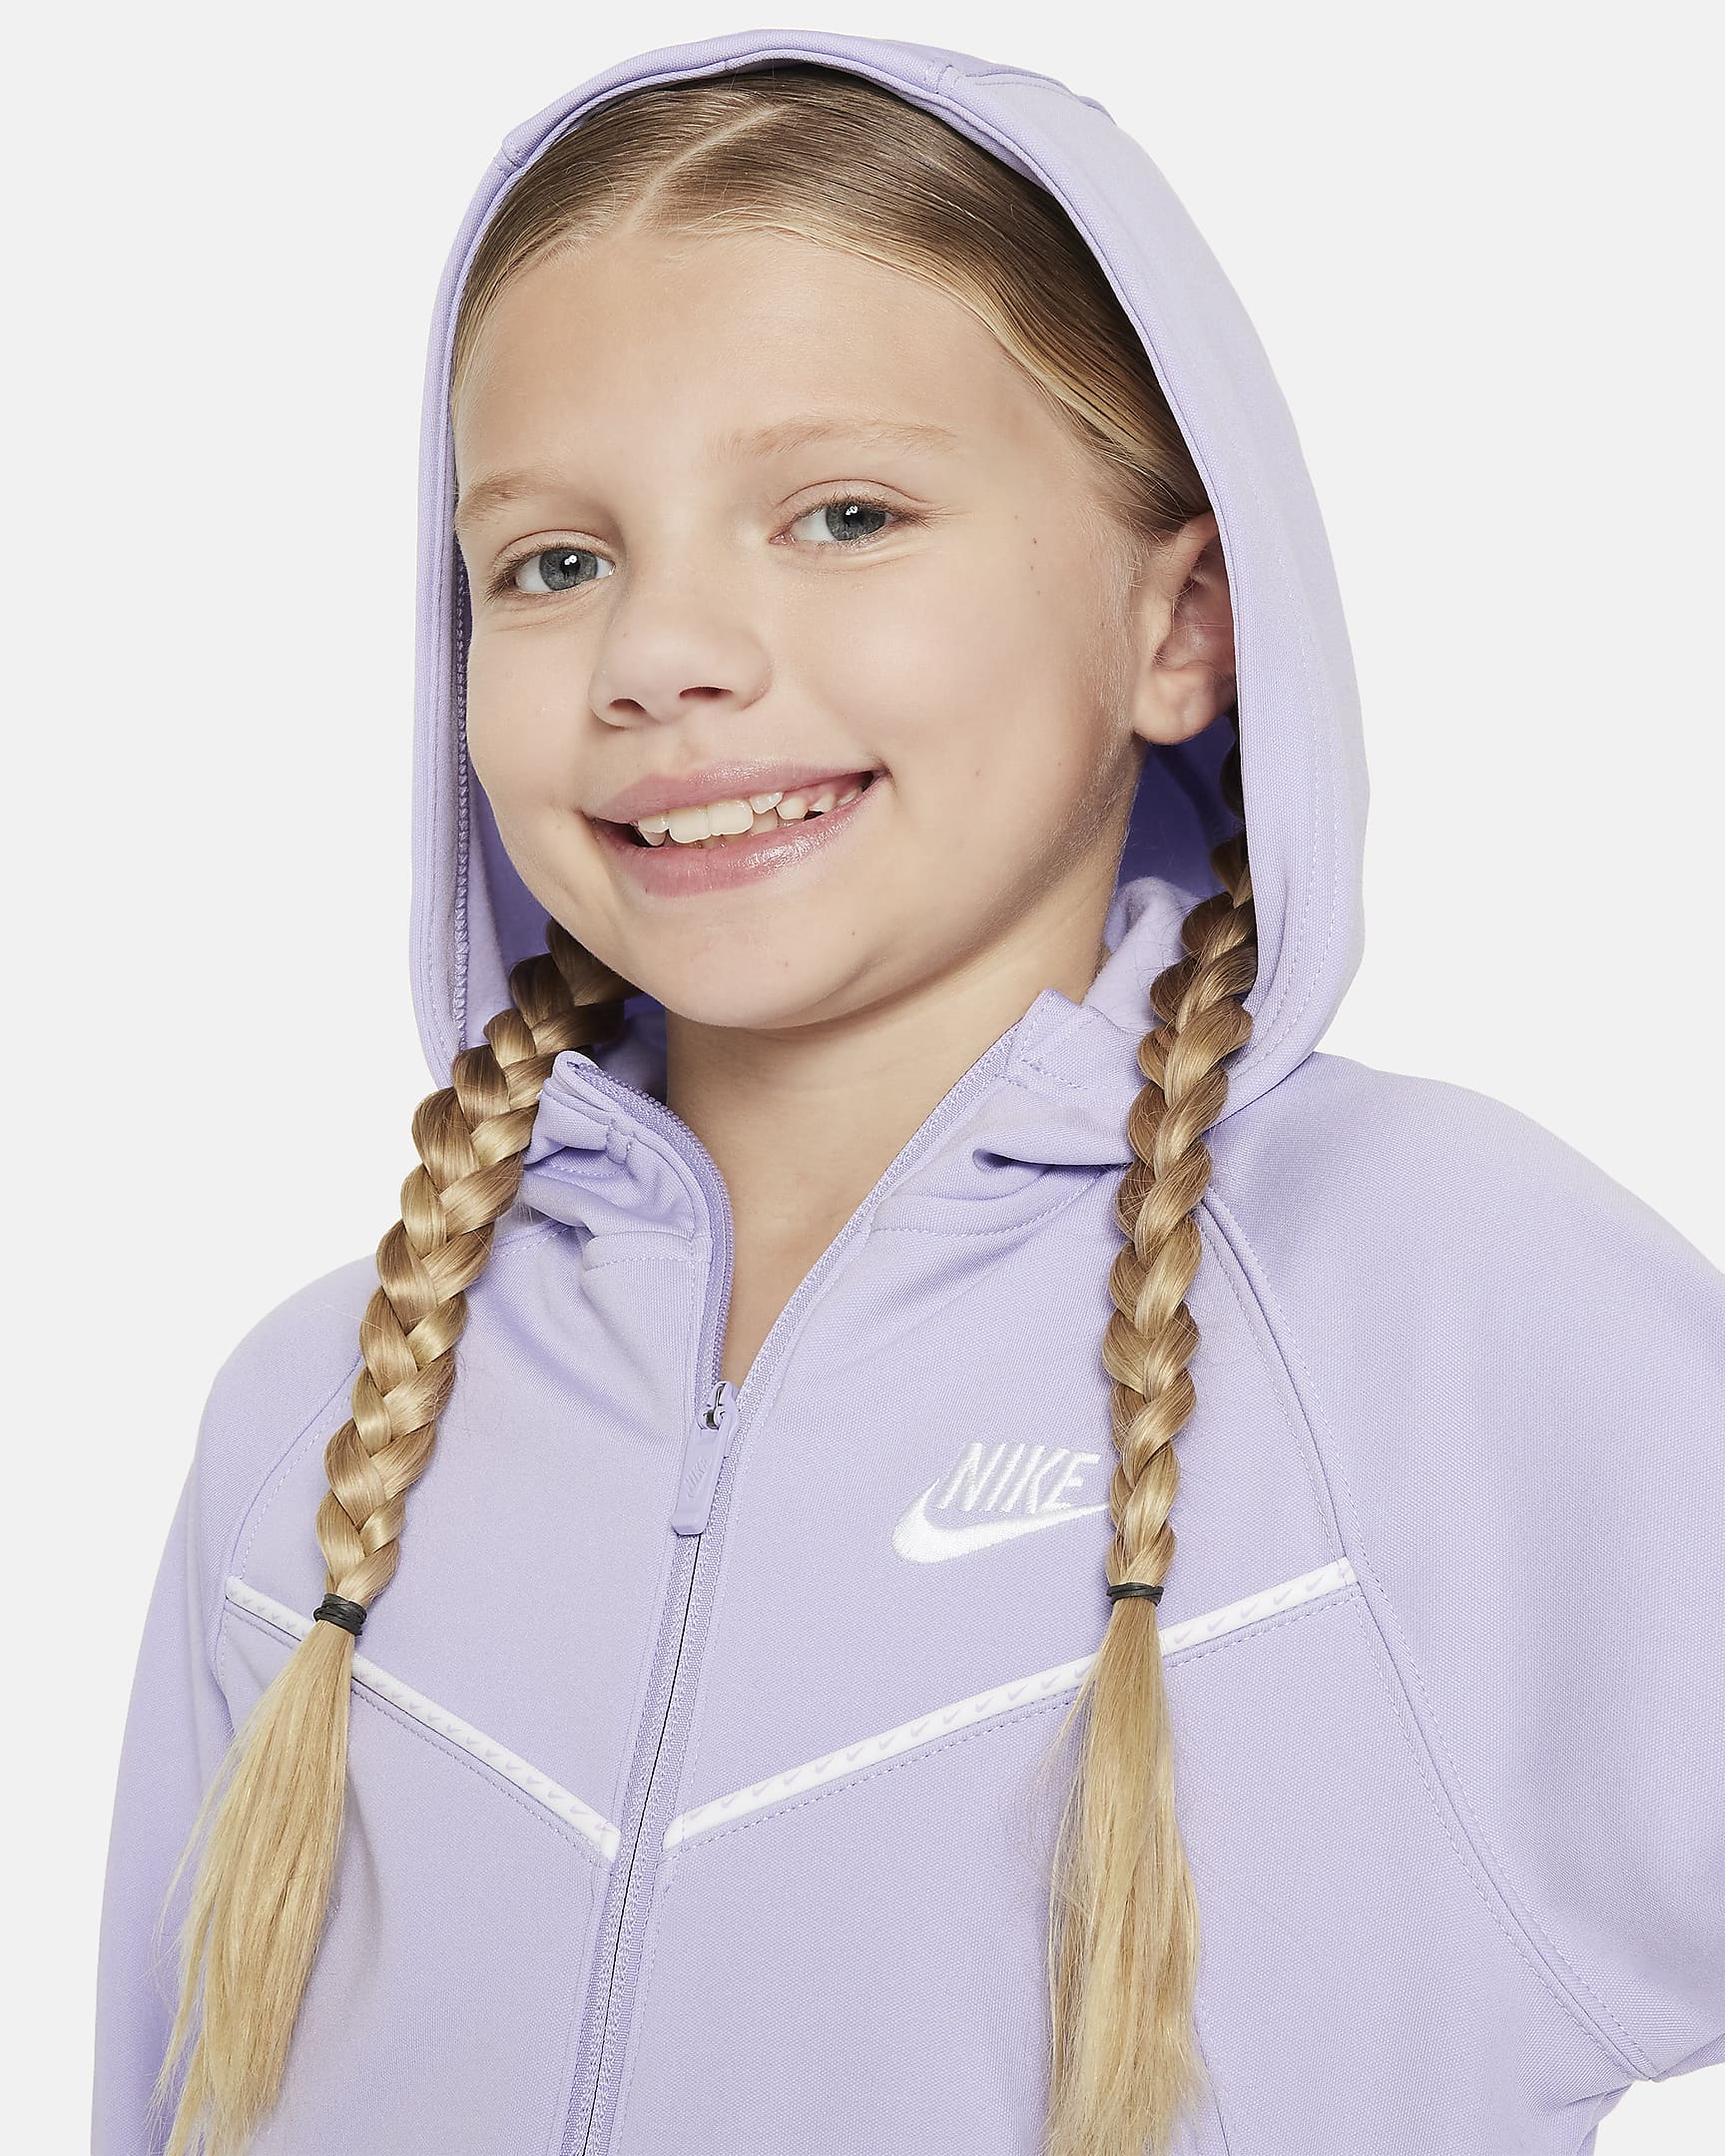 Nike Sportswear Older Kids' (Girls') Tracksuit - Hydrangeas/Hydrangeas/White/White